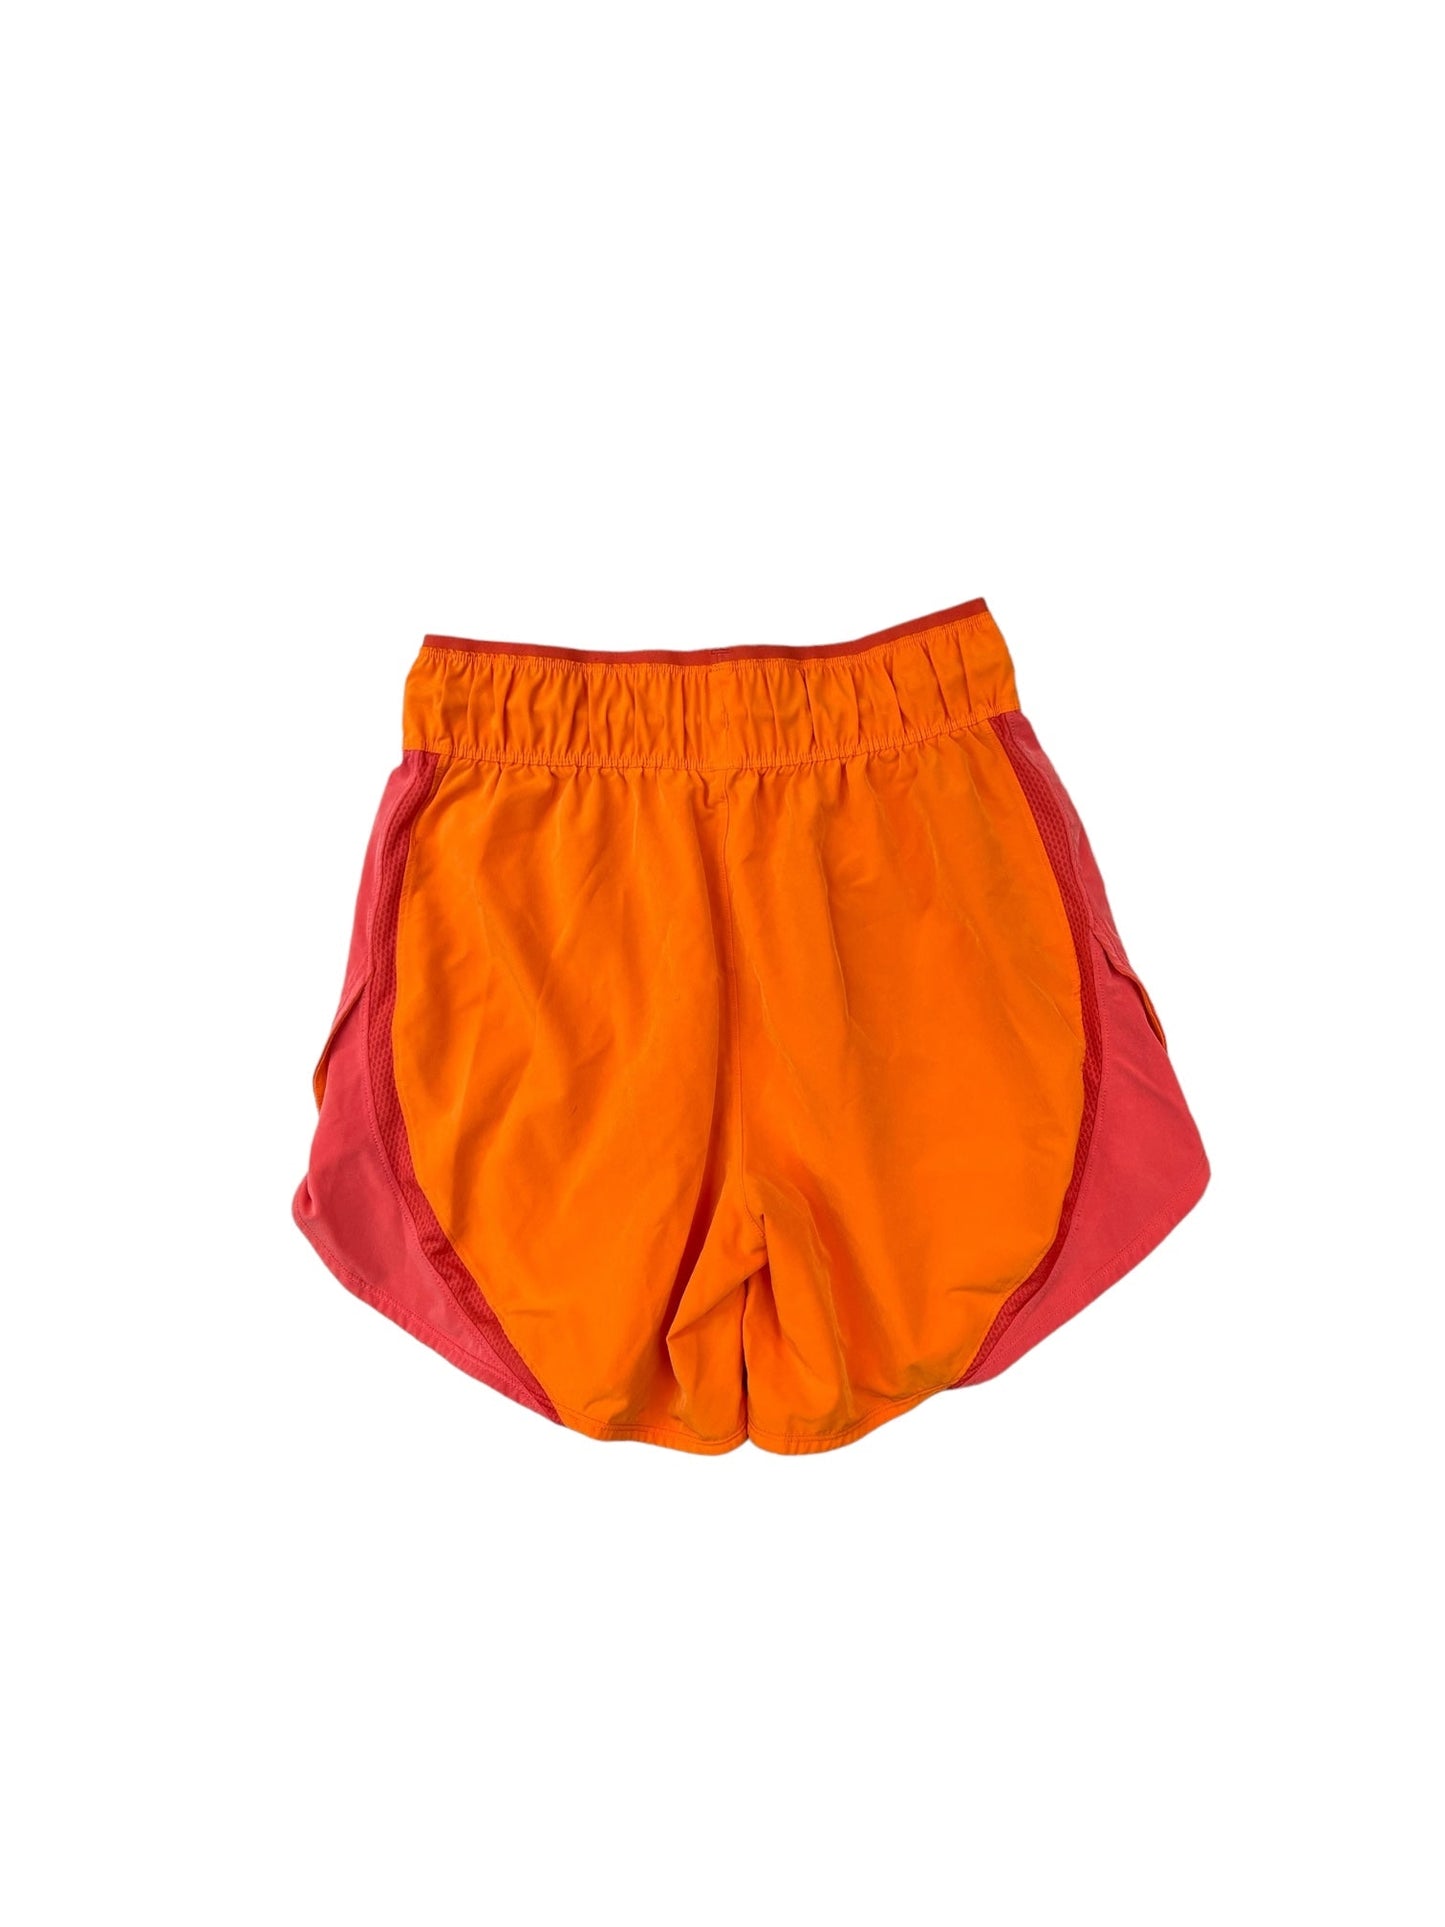 Athletic Shorts By AIR JORDAN  Size: S